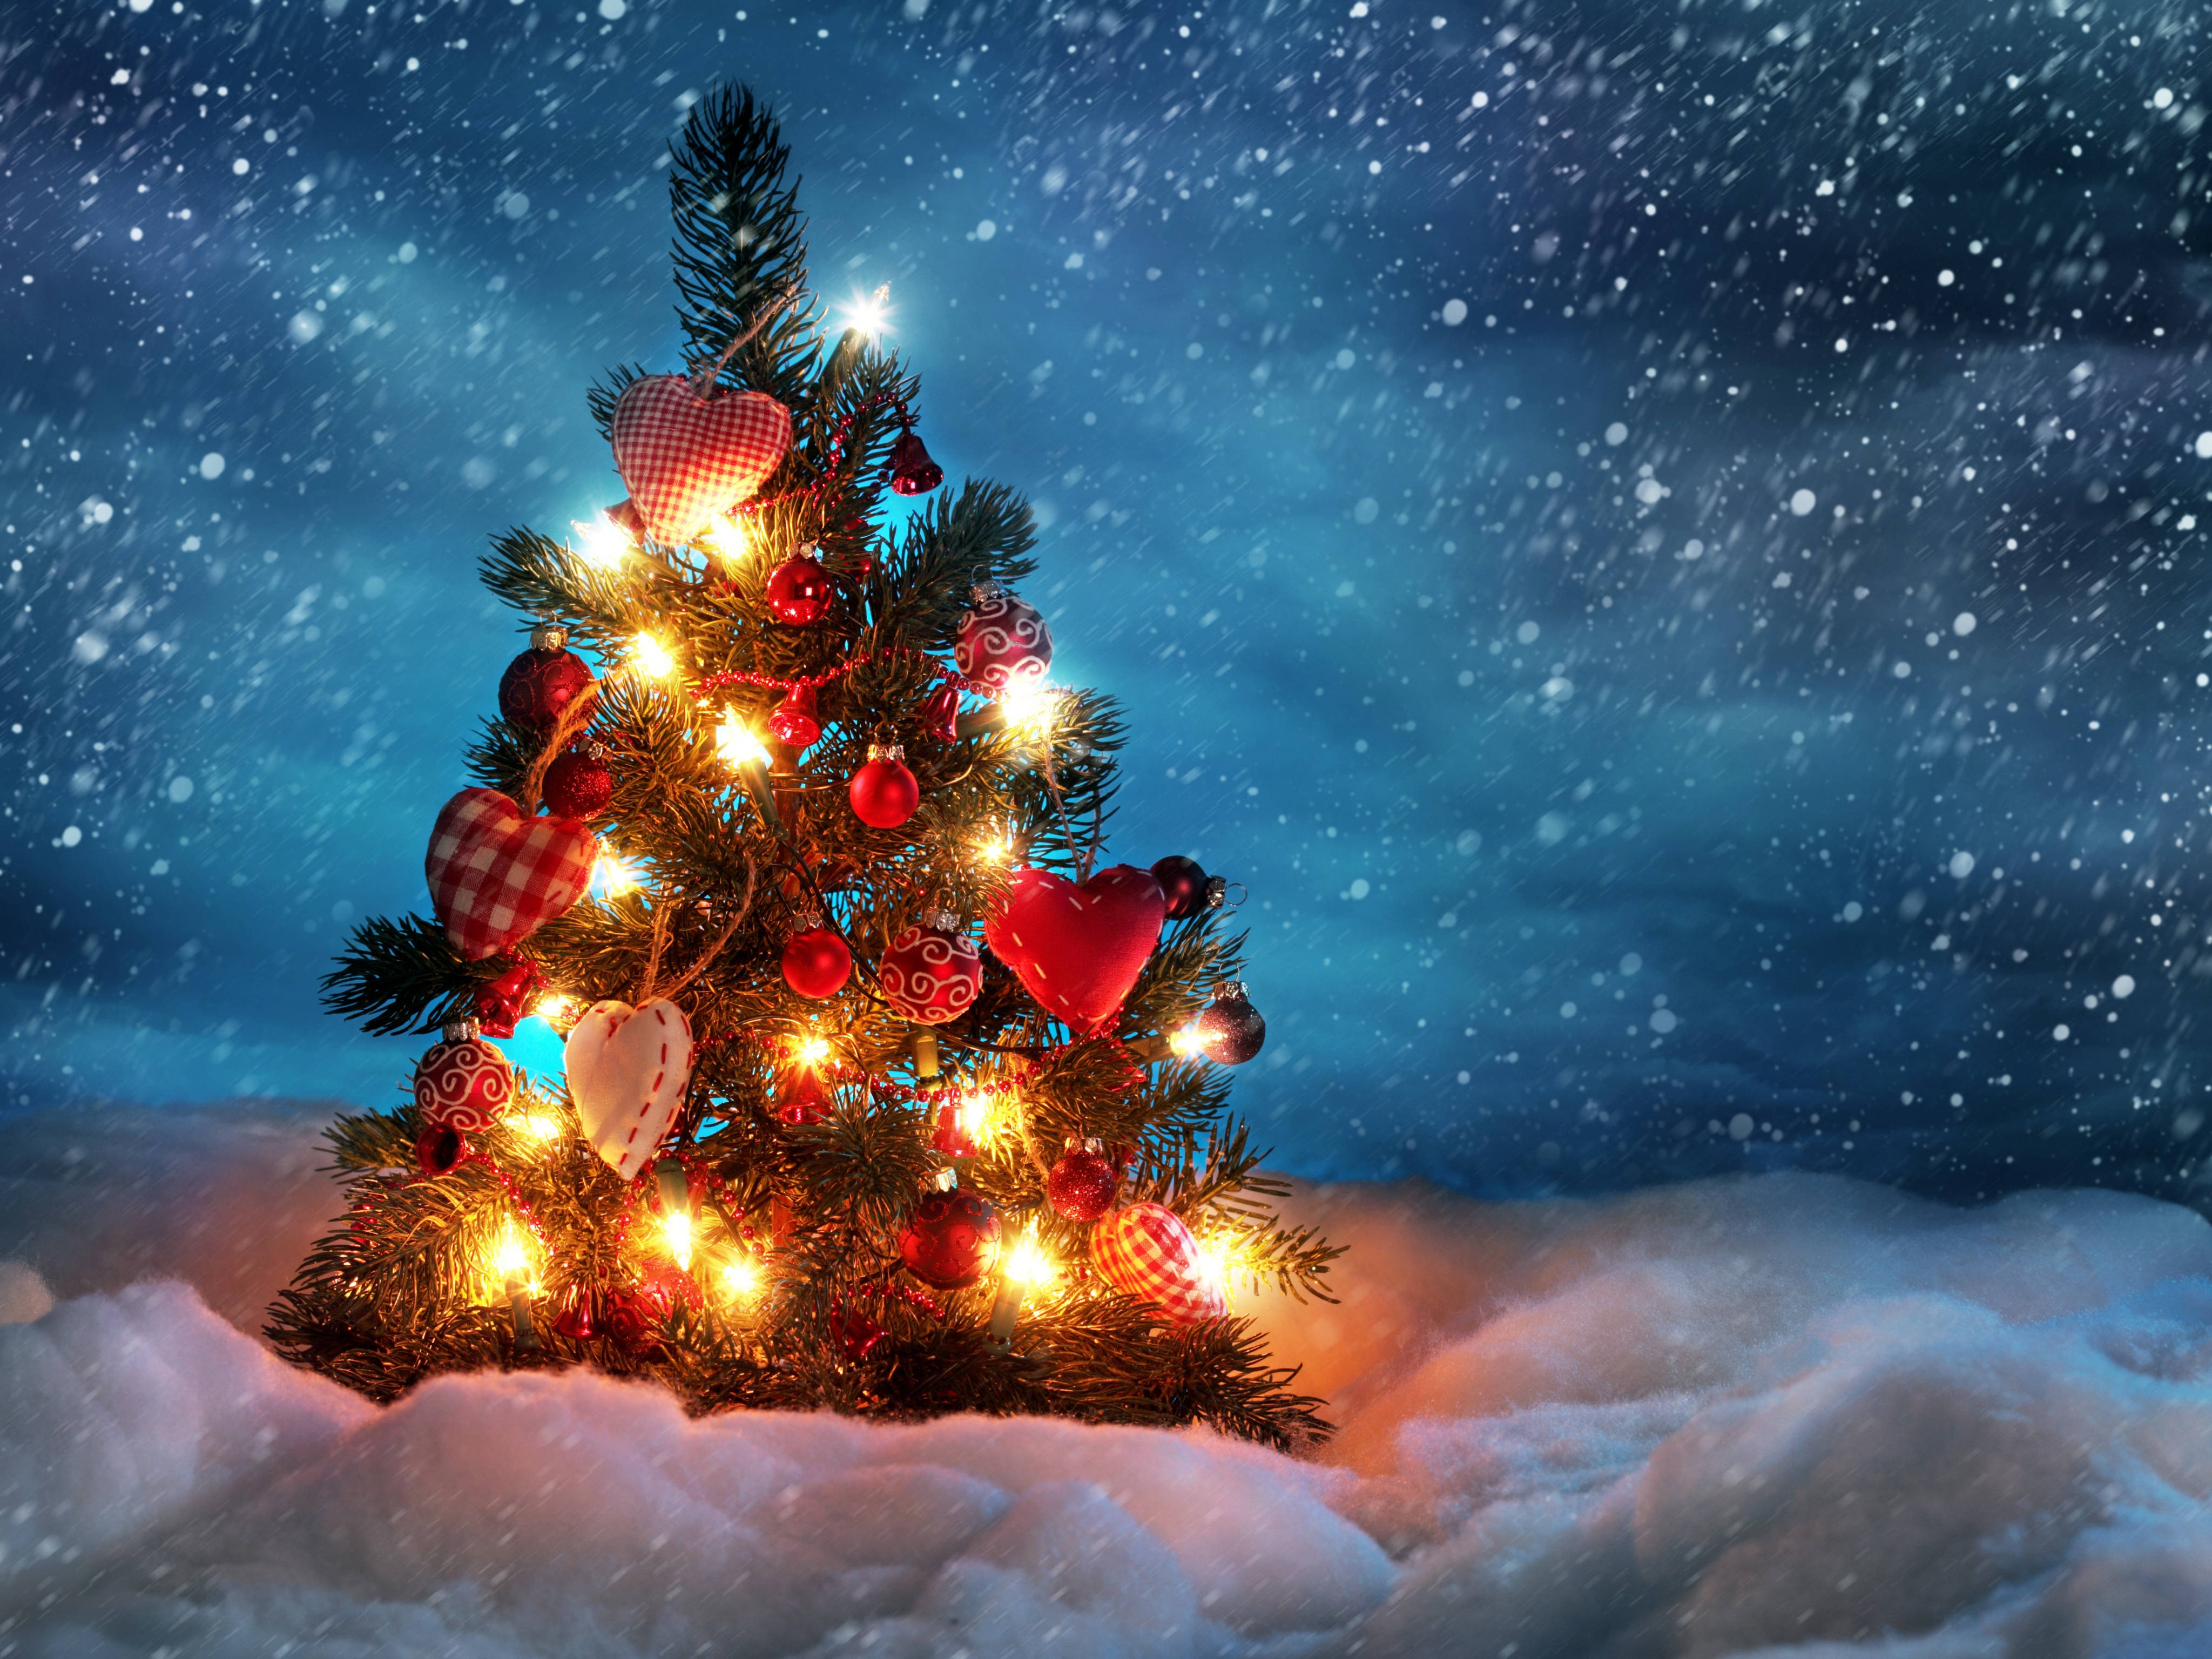 Cool Snowy Christmas Tree Display Desktop Wallpaper